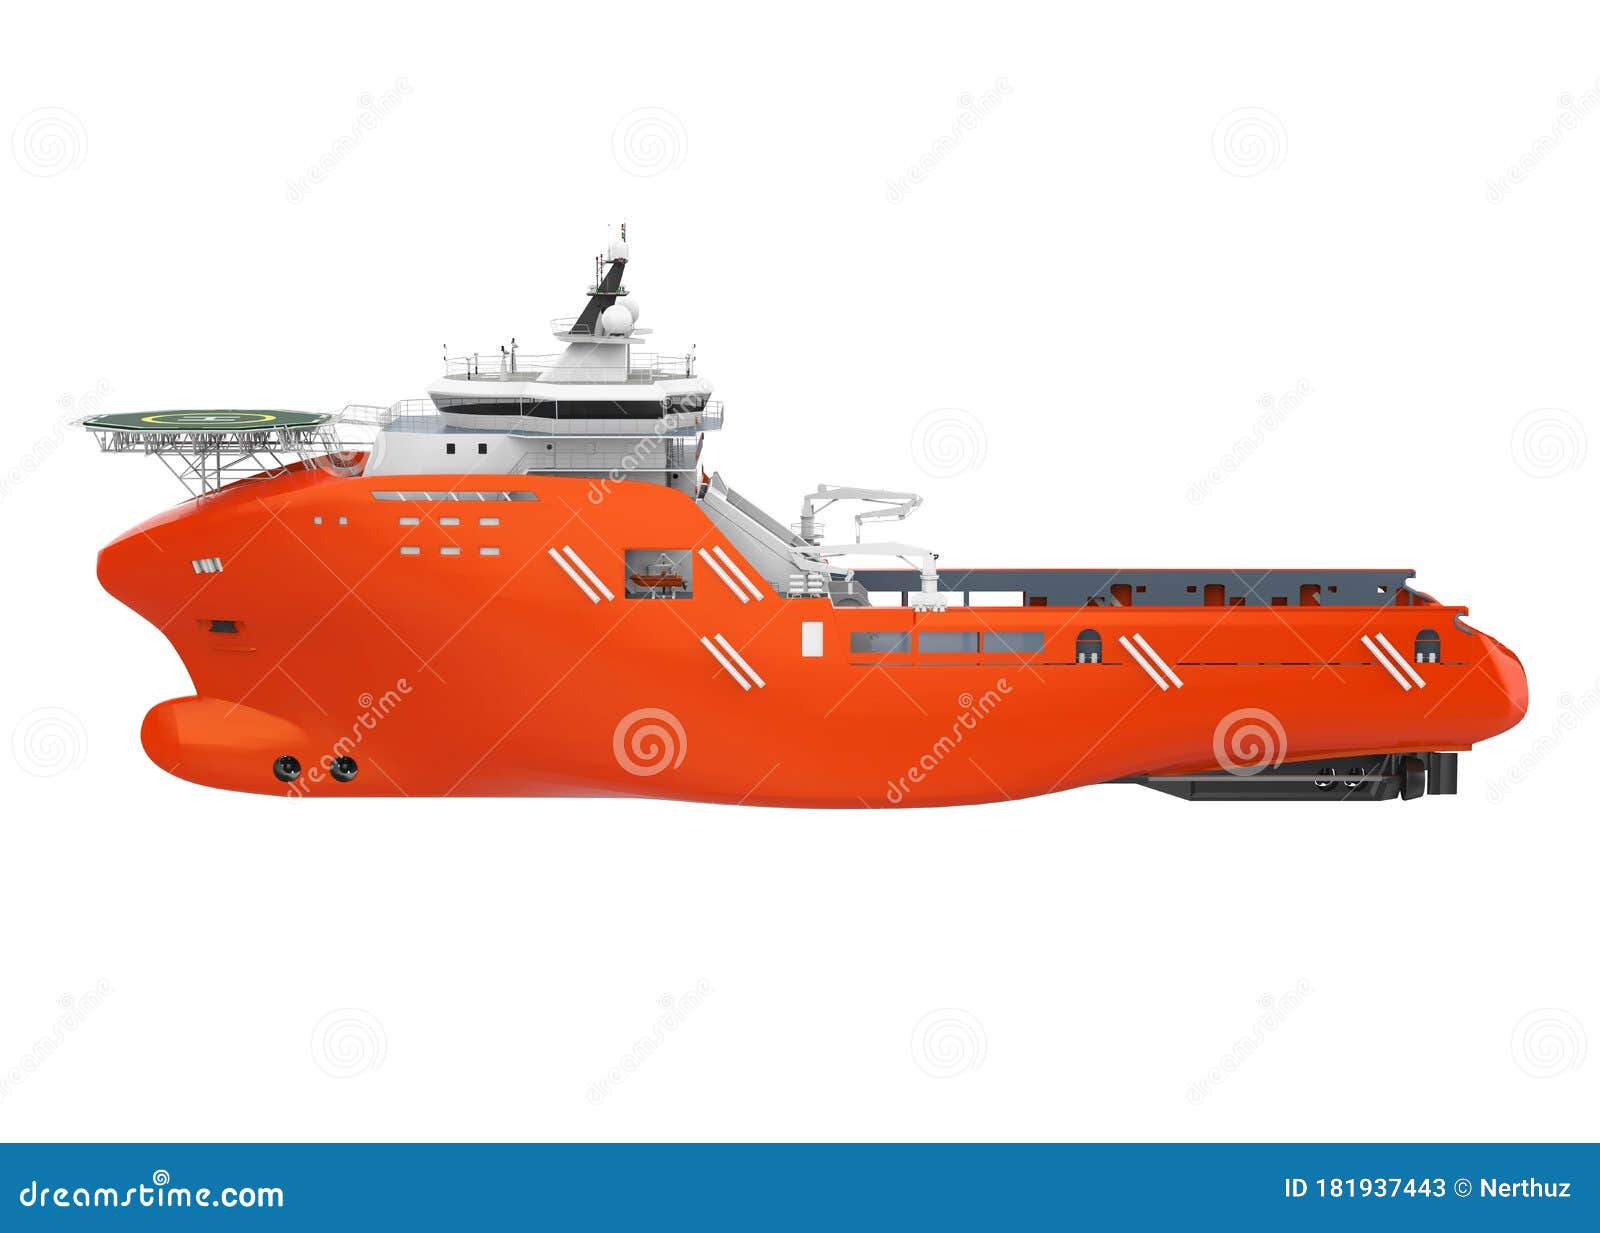 anchor handling tug supply vessel 